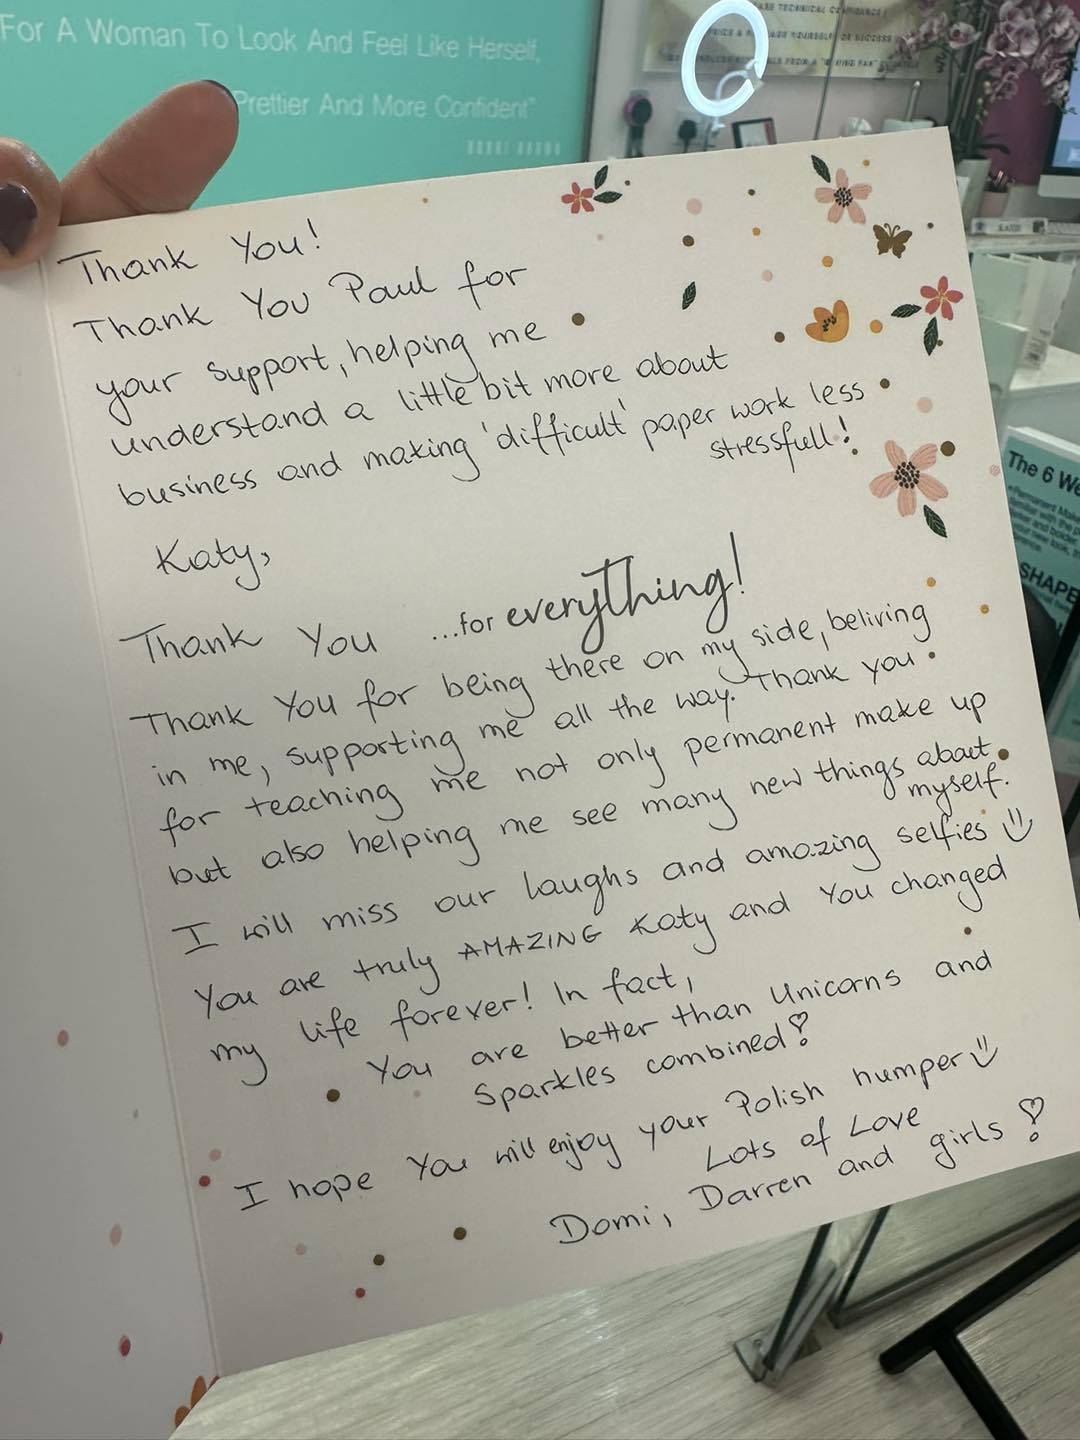 Dominika's thank you card to Paul & Katy